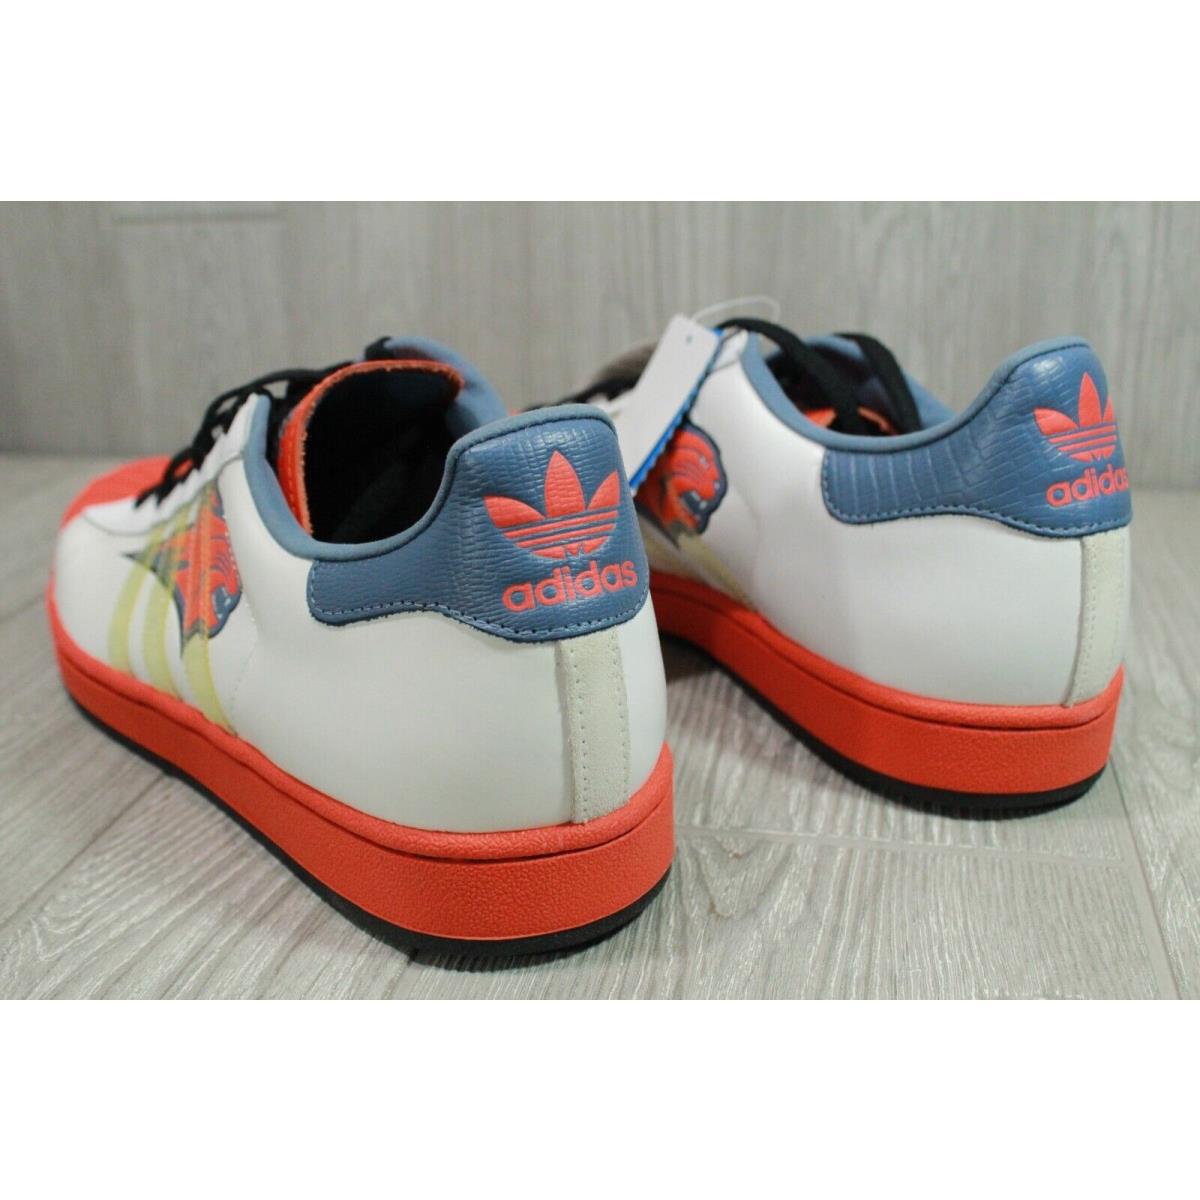 Adidas shoes Superstar - Multicolor 3